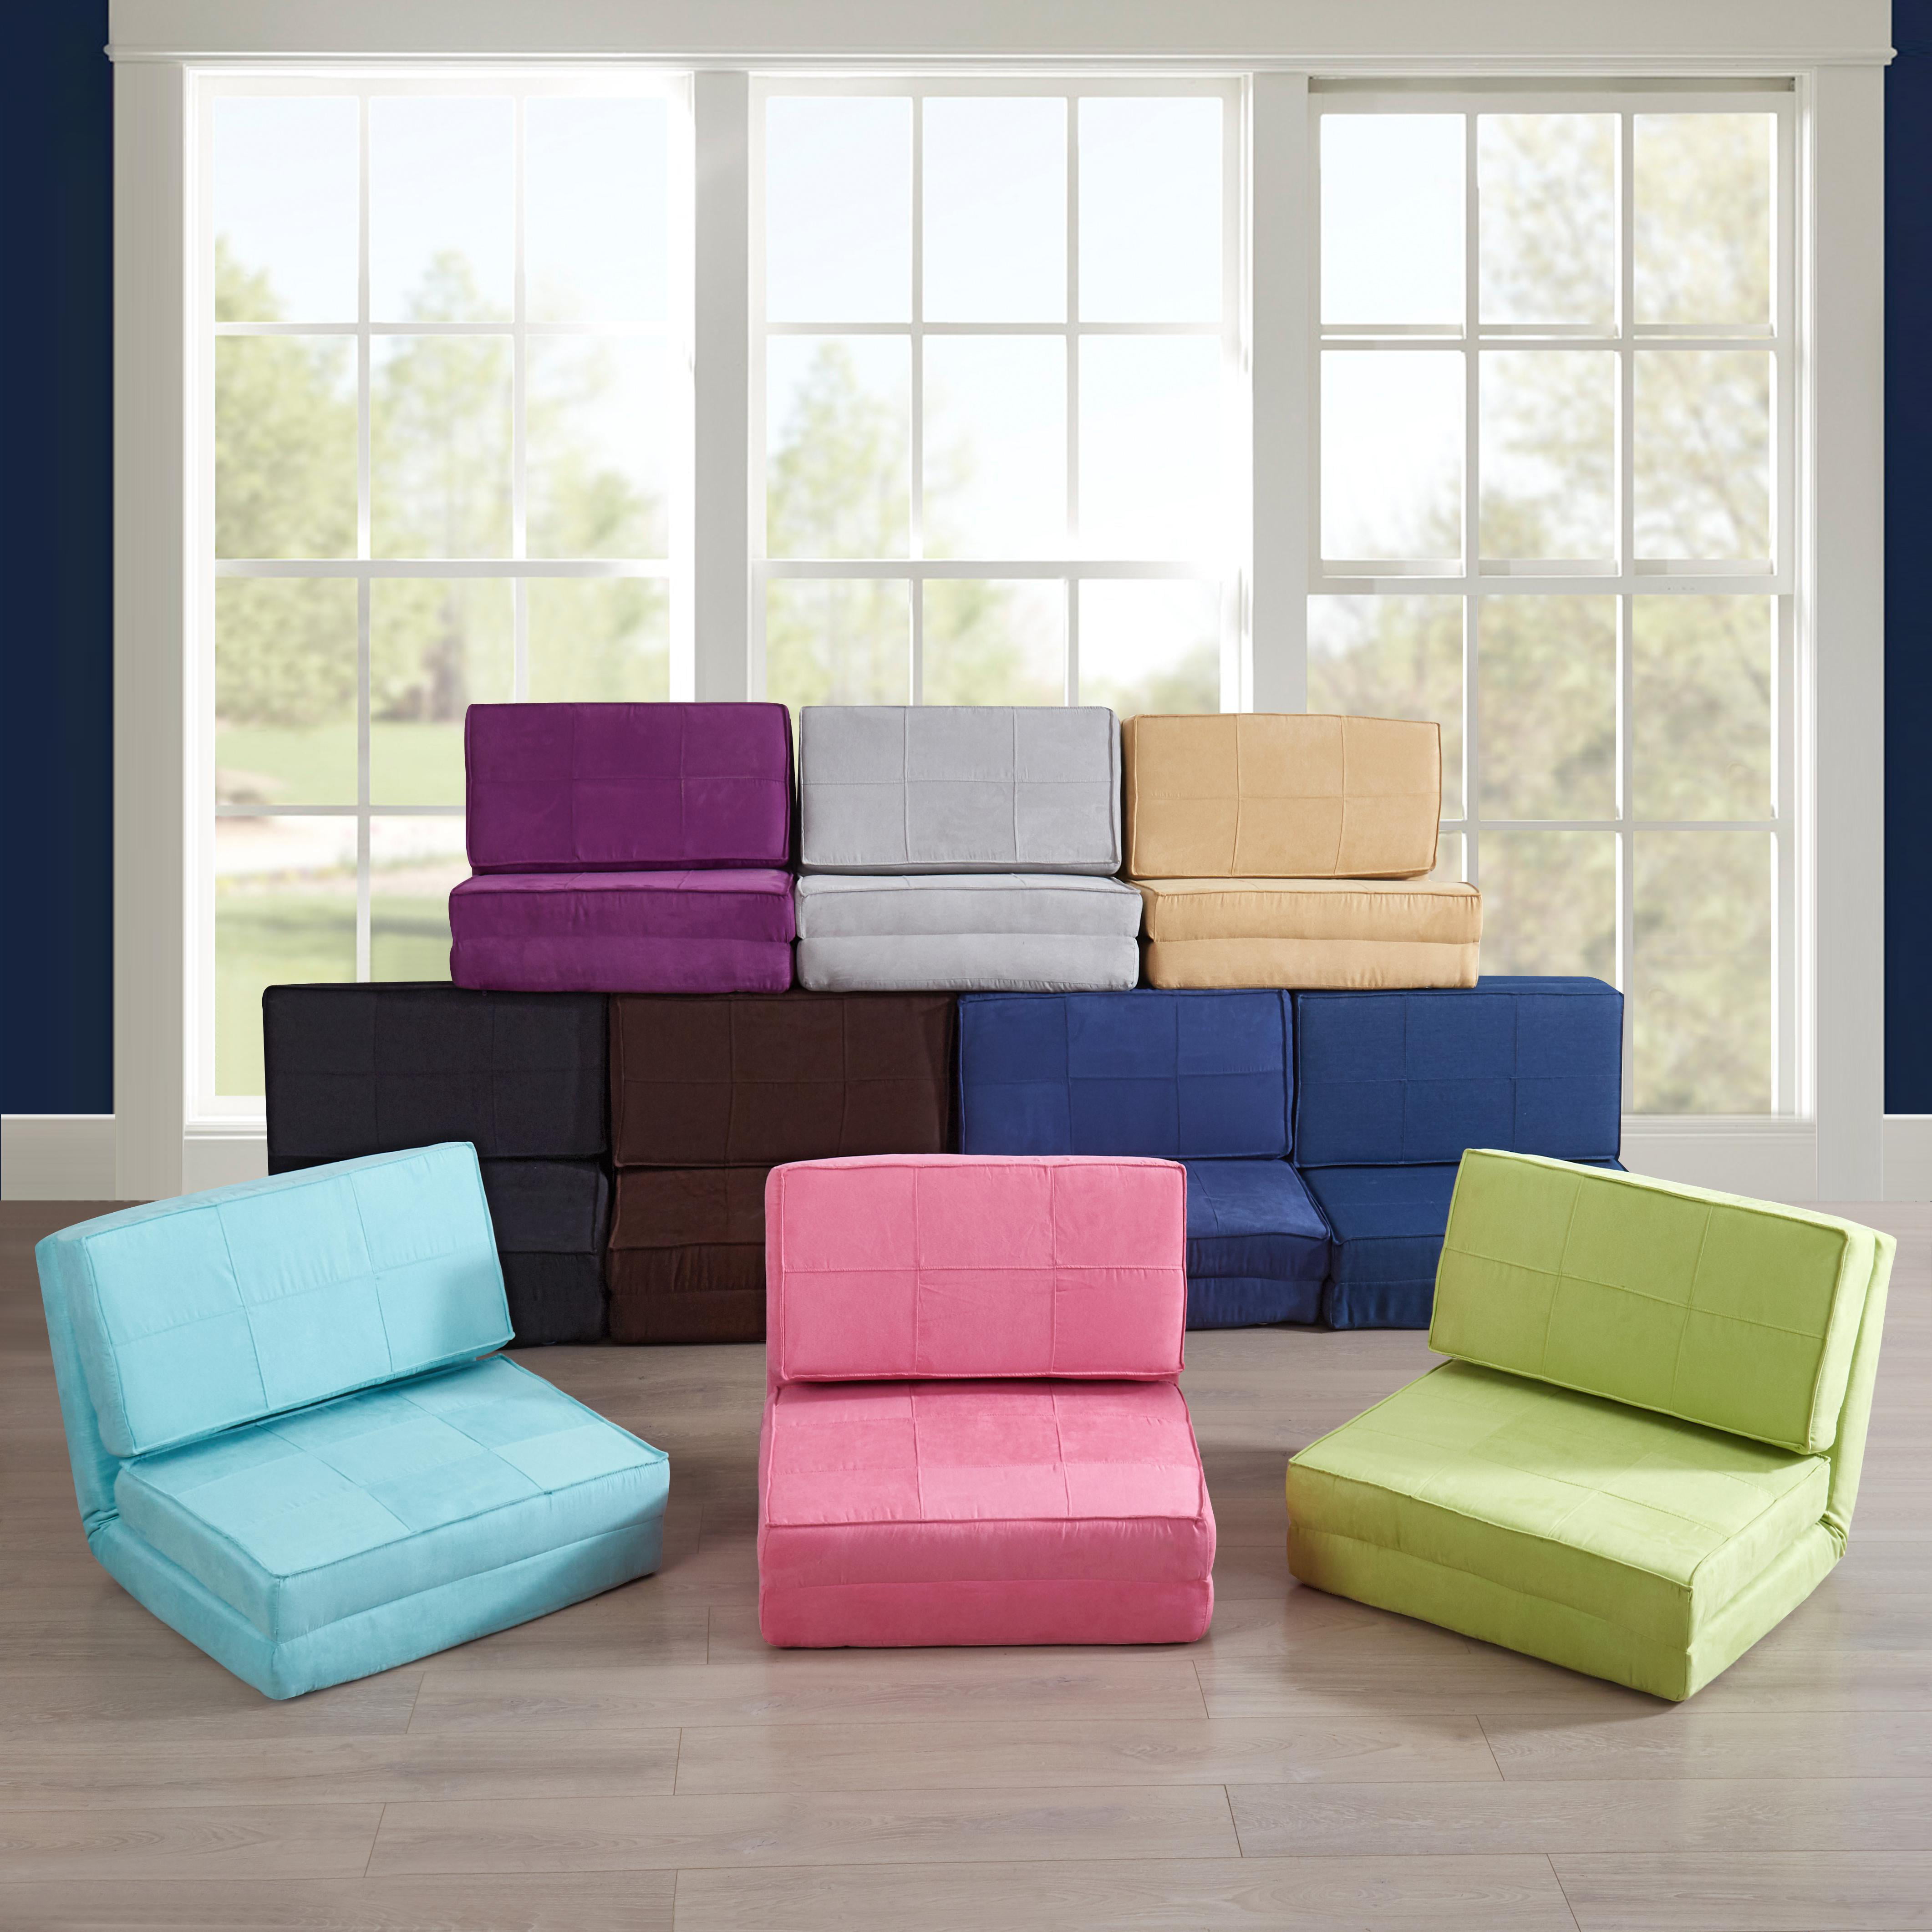 Flip Chair Bed Sofa Convertible Futon Sleeper Couch Dorm